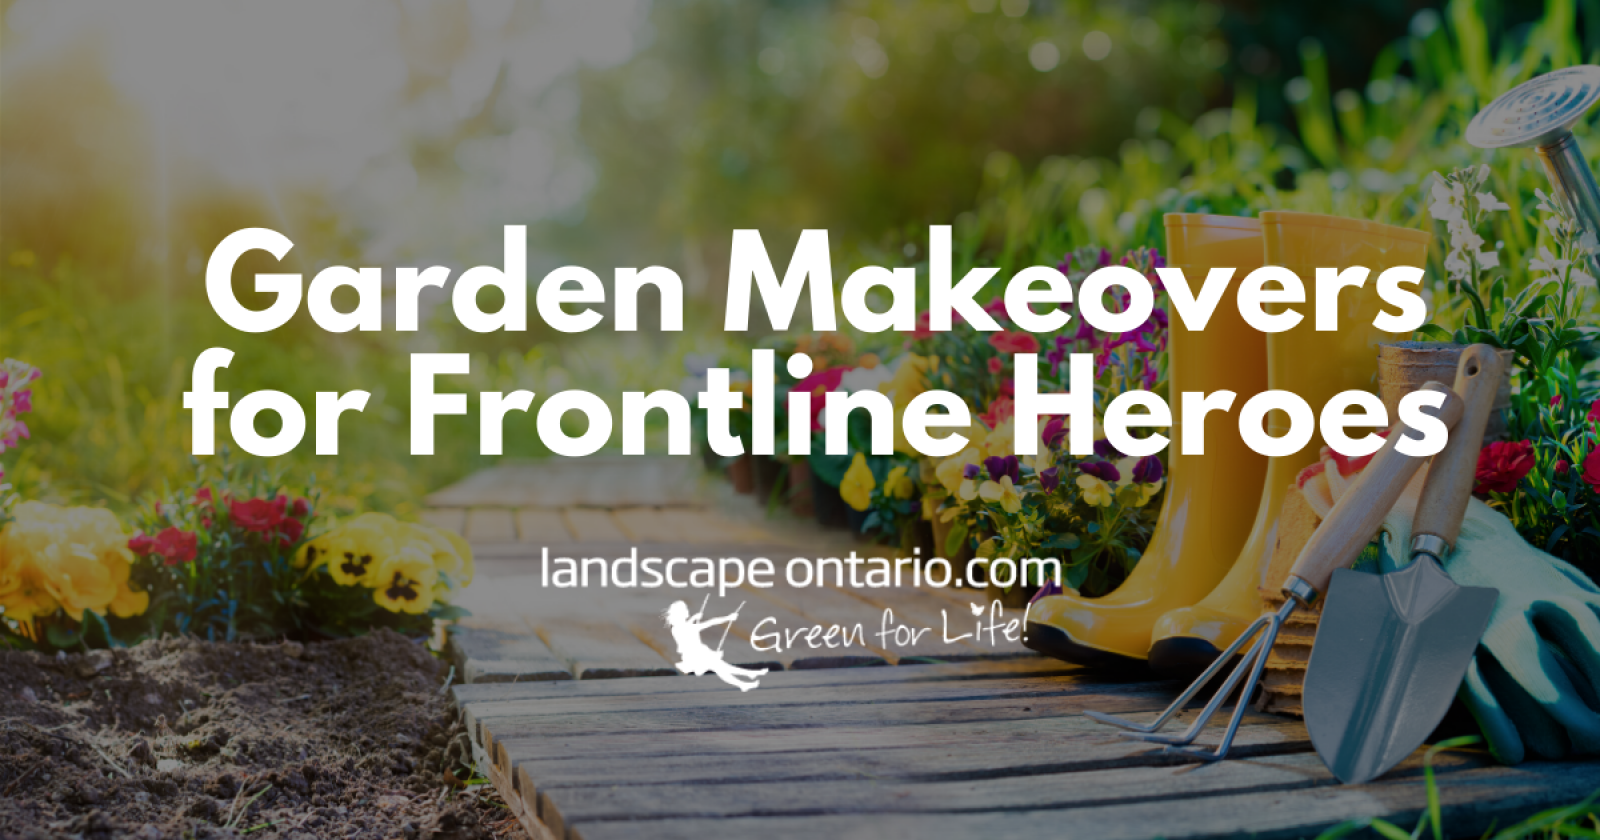 Windsor Chapter garden makeover help